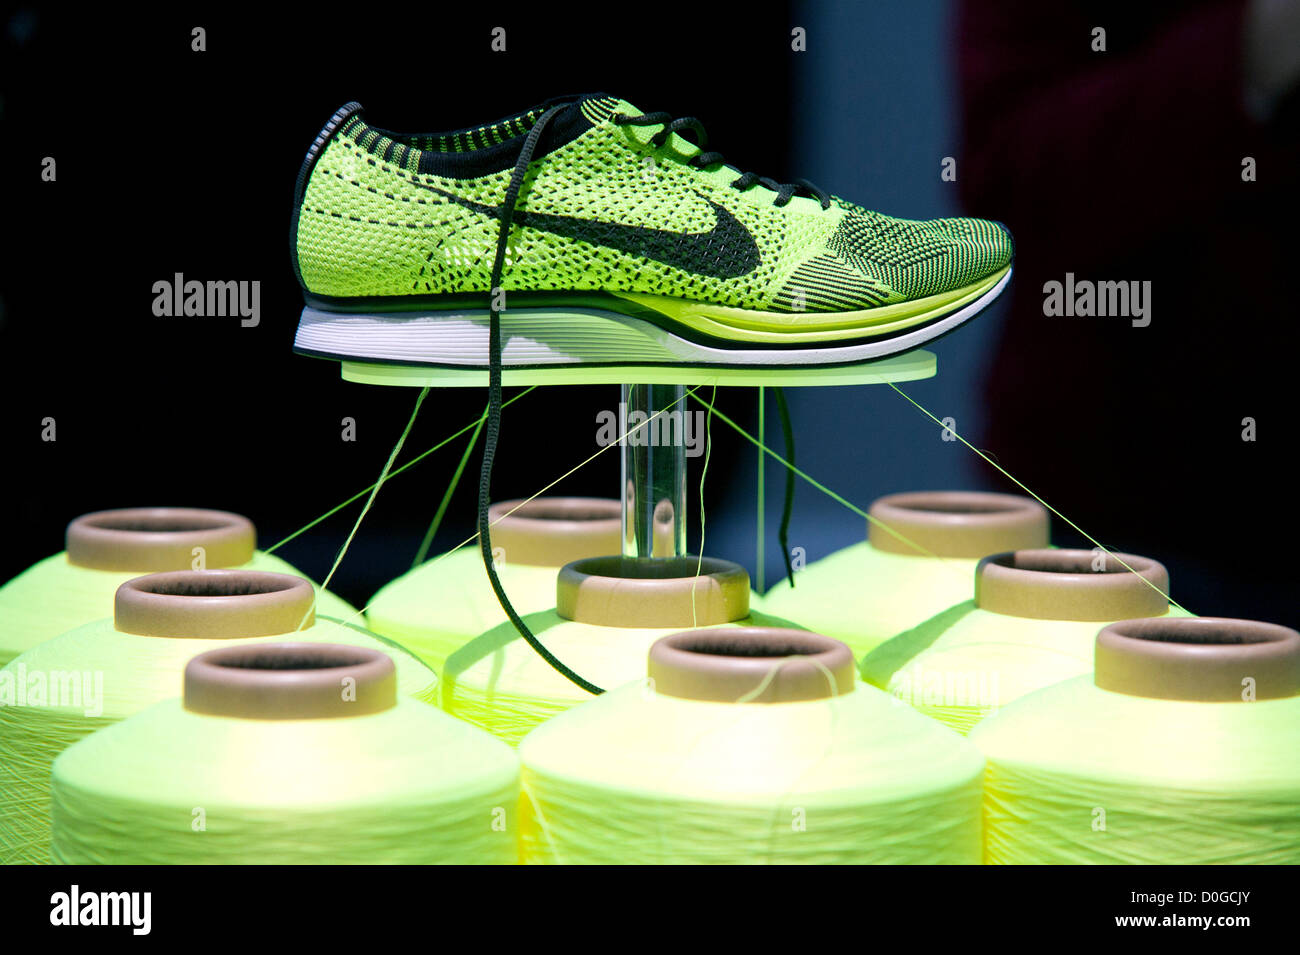 November 25, 2012, Tokyo, Japan - The new technology of running shoe ...